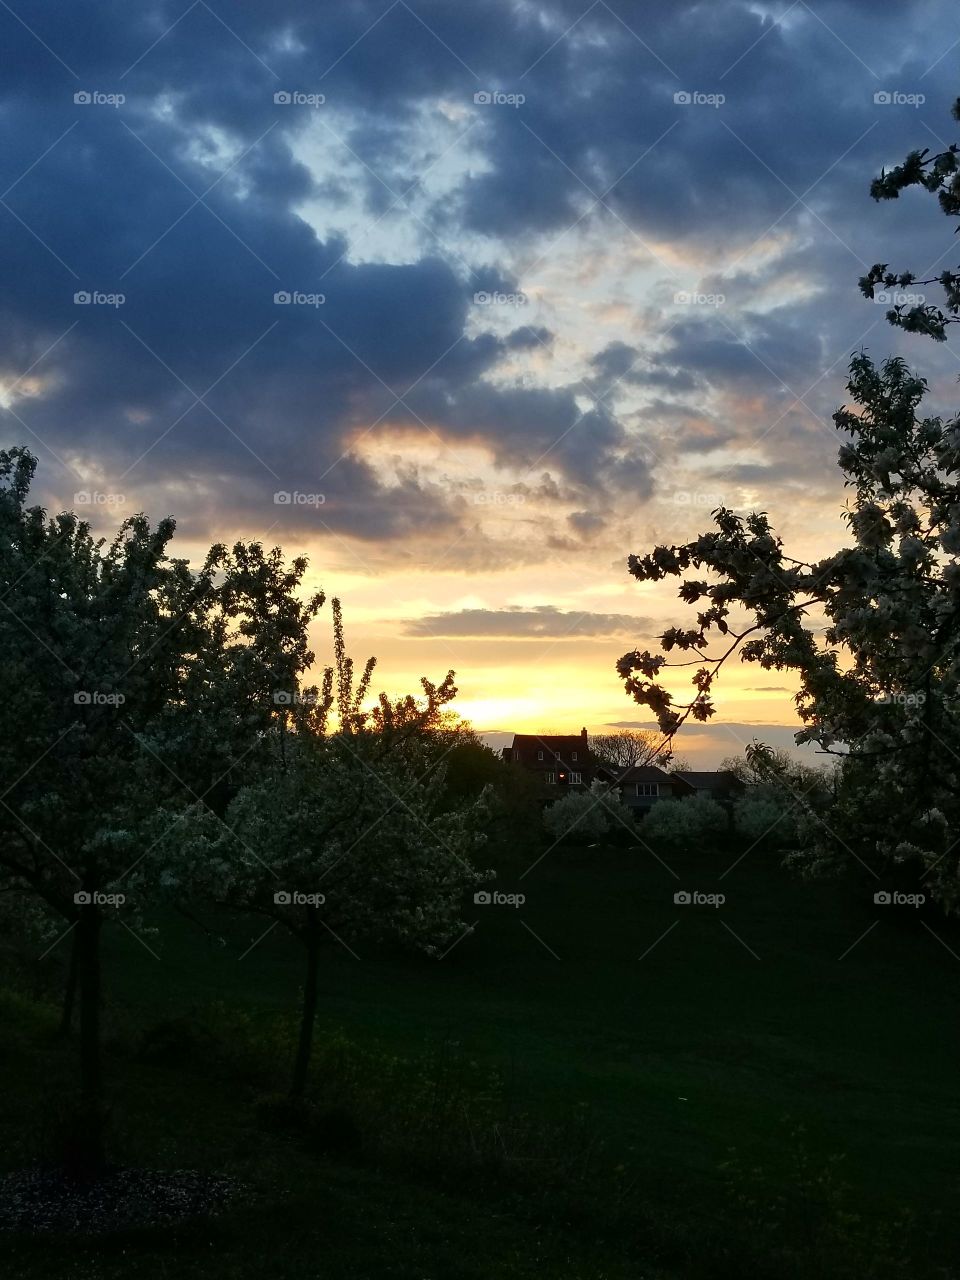 Spring sunset 2